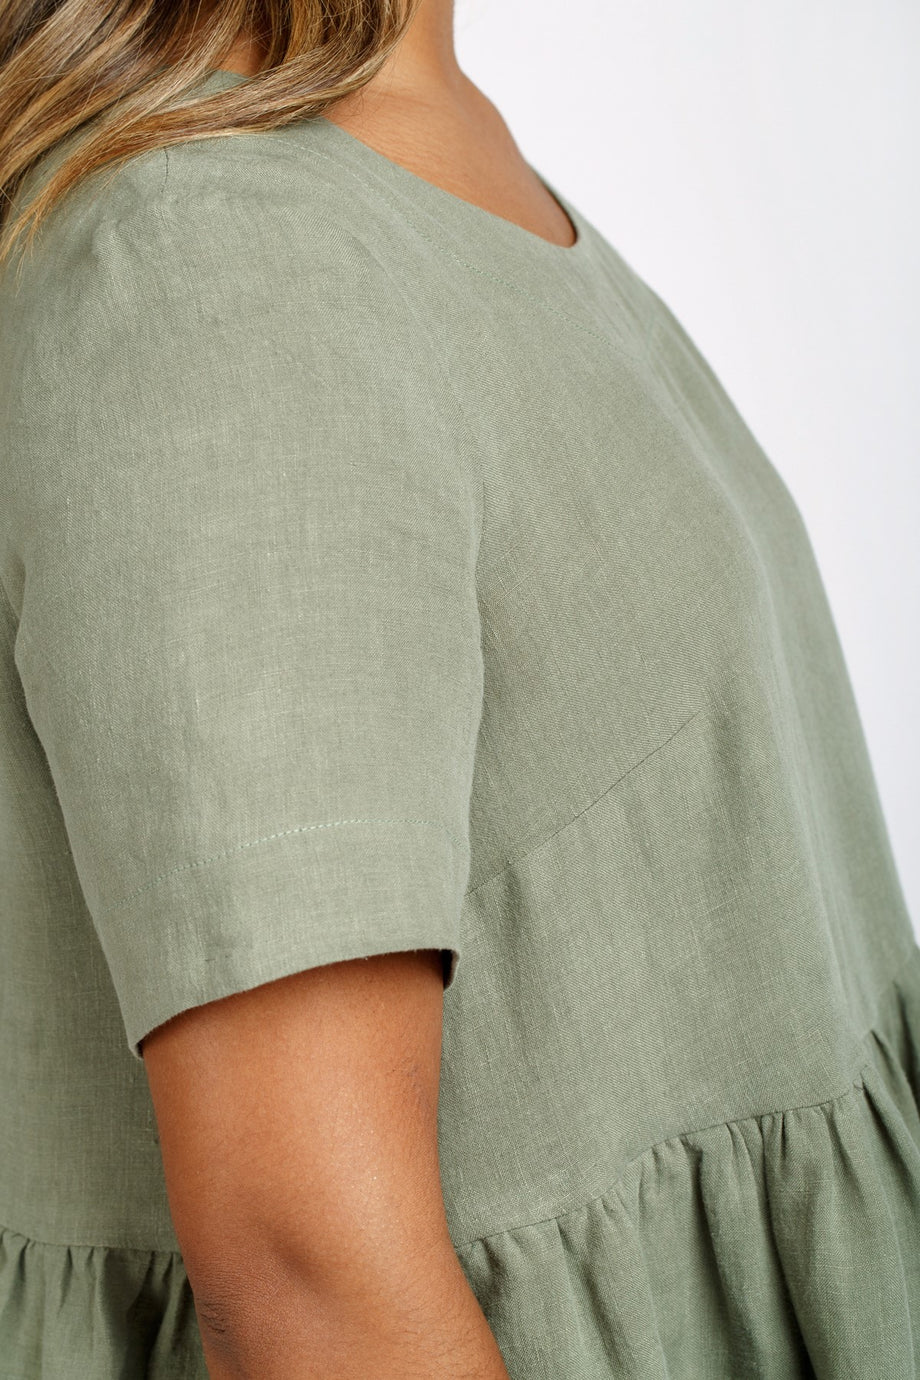 Megan Nielsen Protea Capsule Wardrobe Set Pattern – Fabworks Online